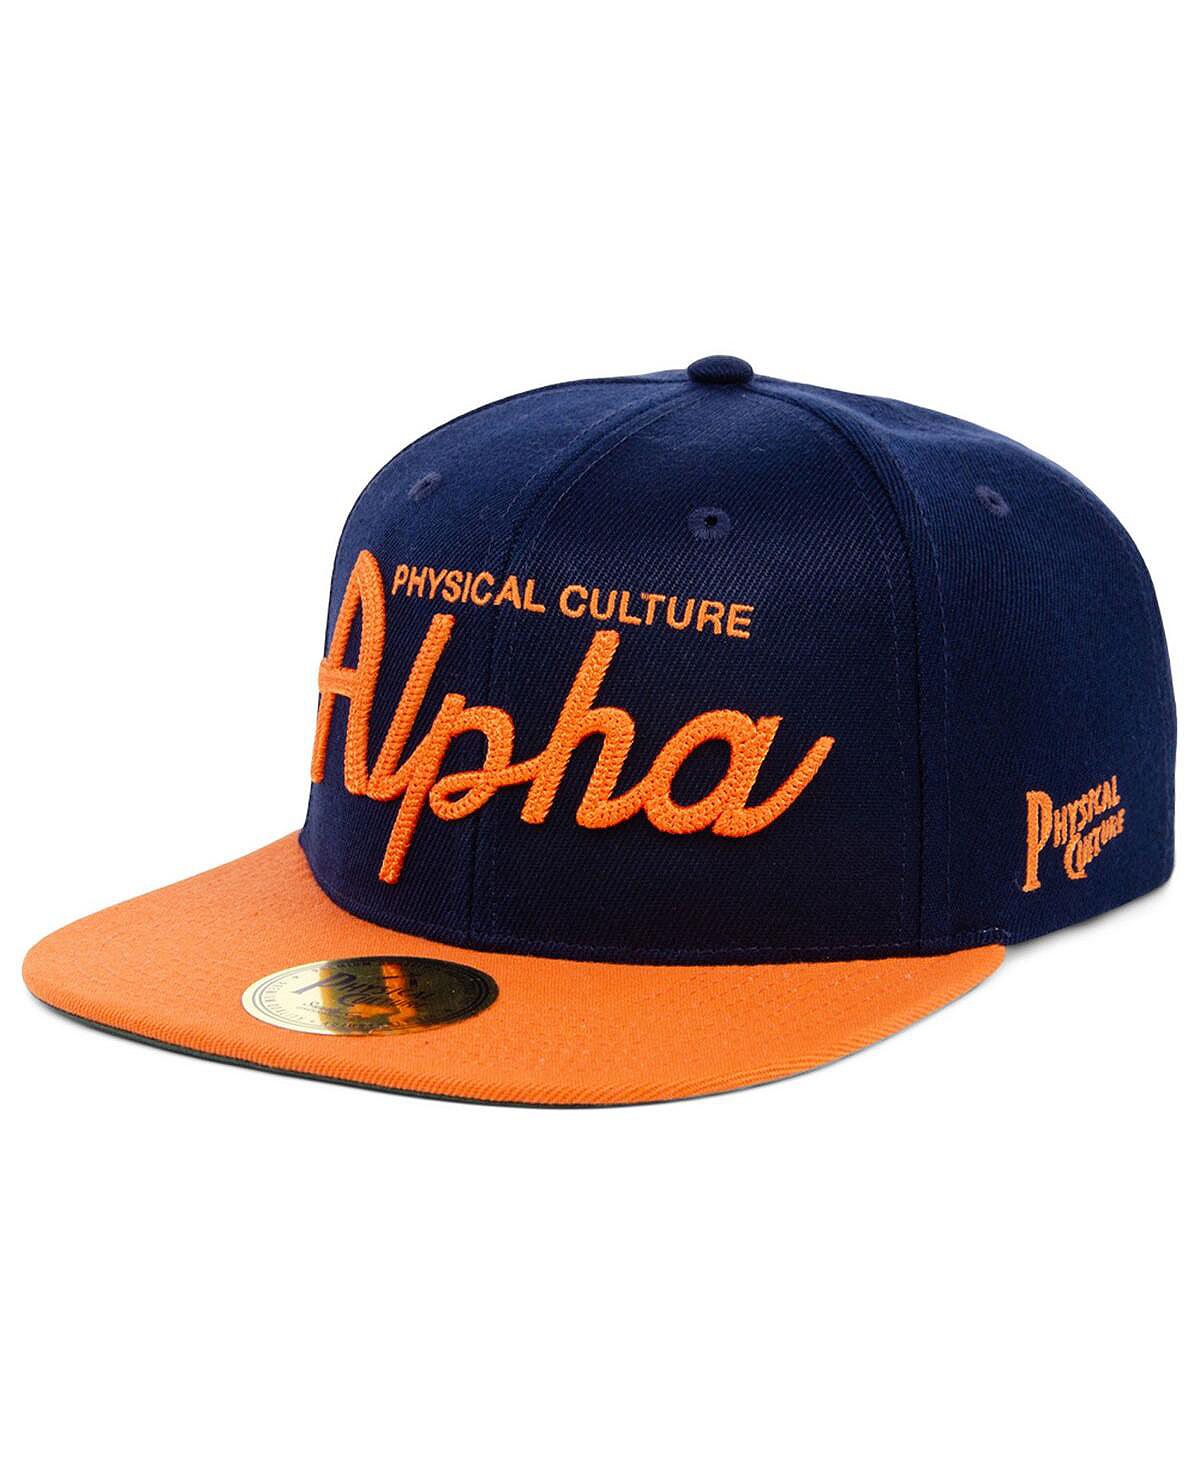 Мужская темно-синяя регулируемая шляпа Alpha Physical Culture Club Black Fives Snapback